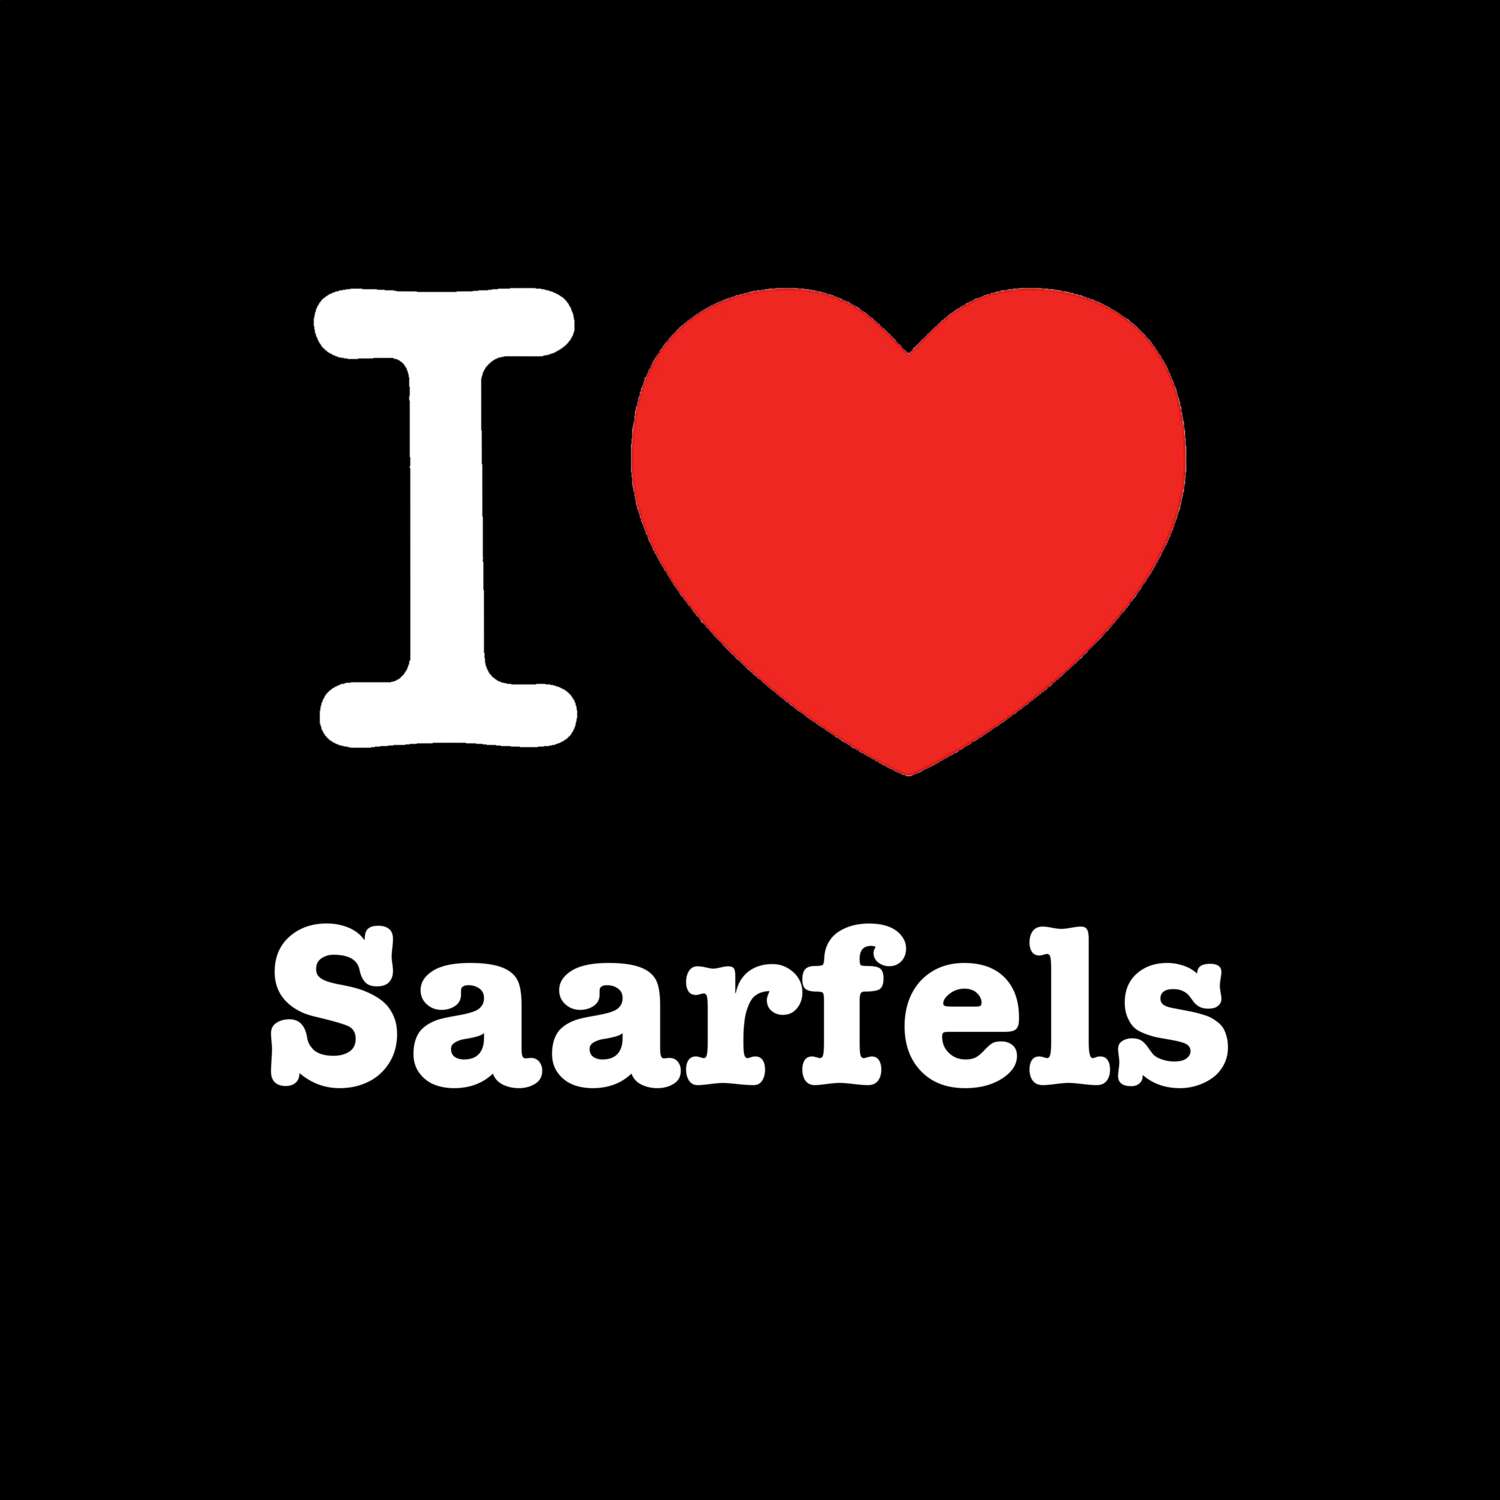 Saarfels T-Shirt »I love«